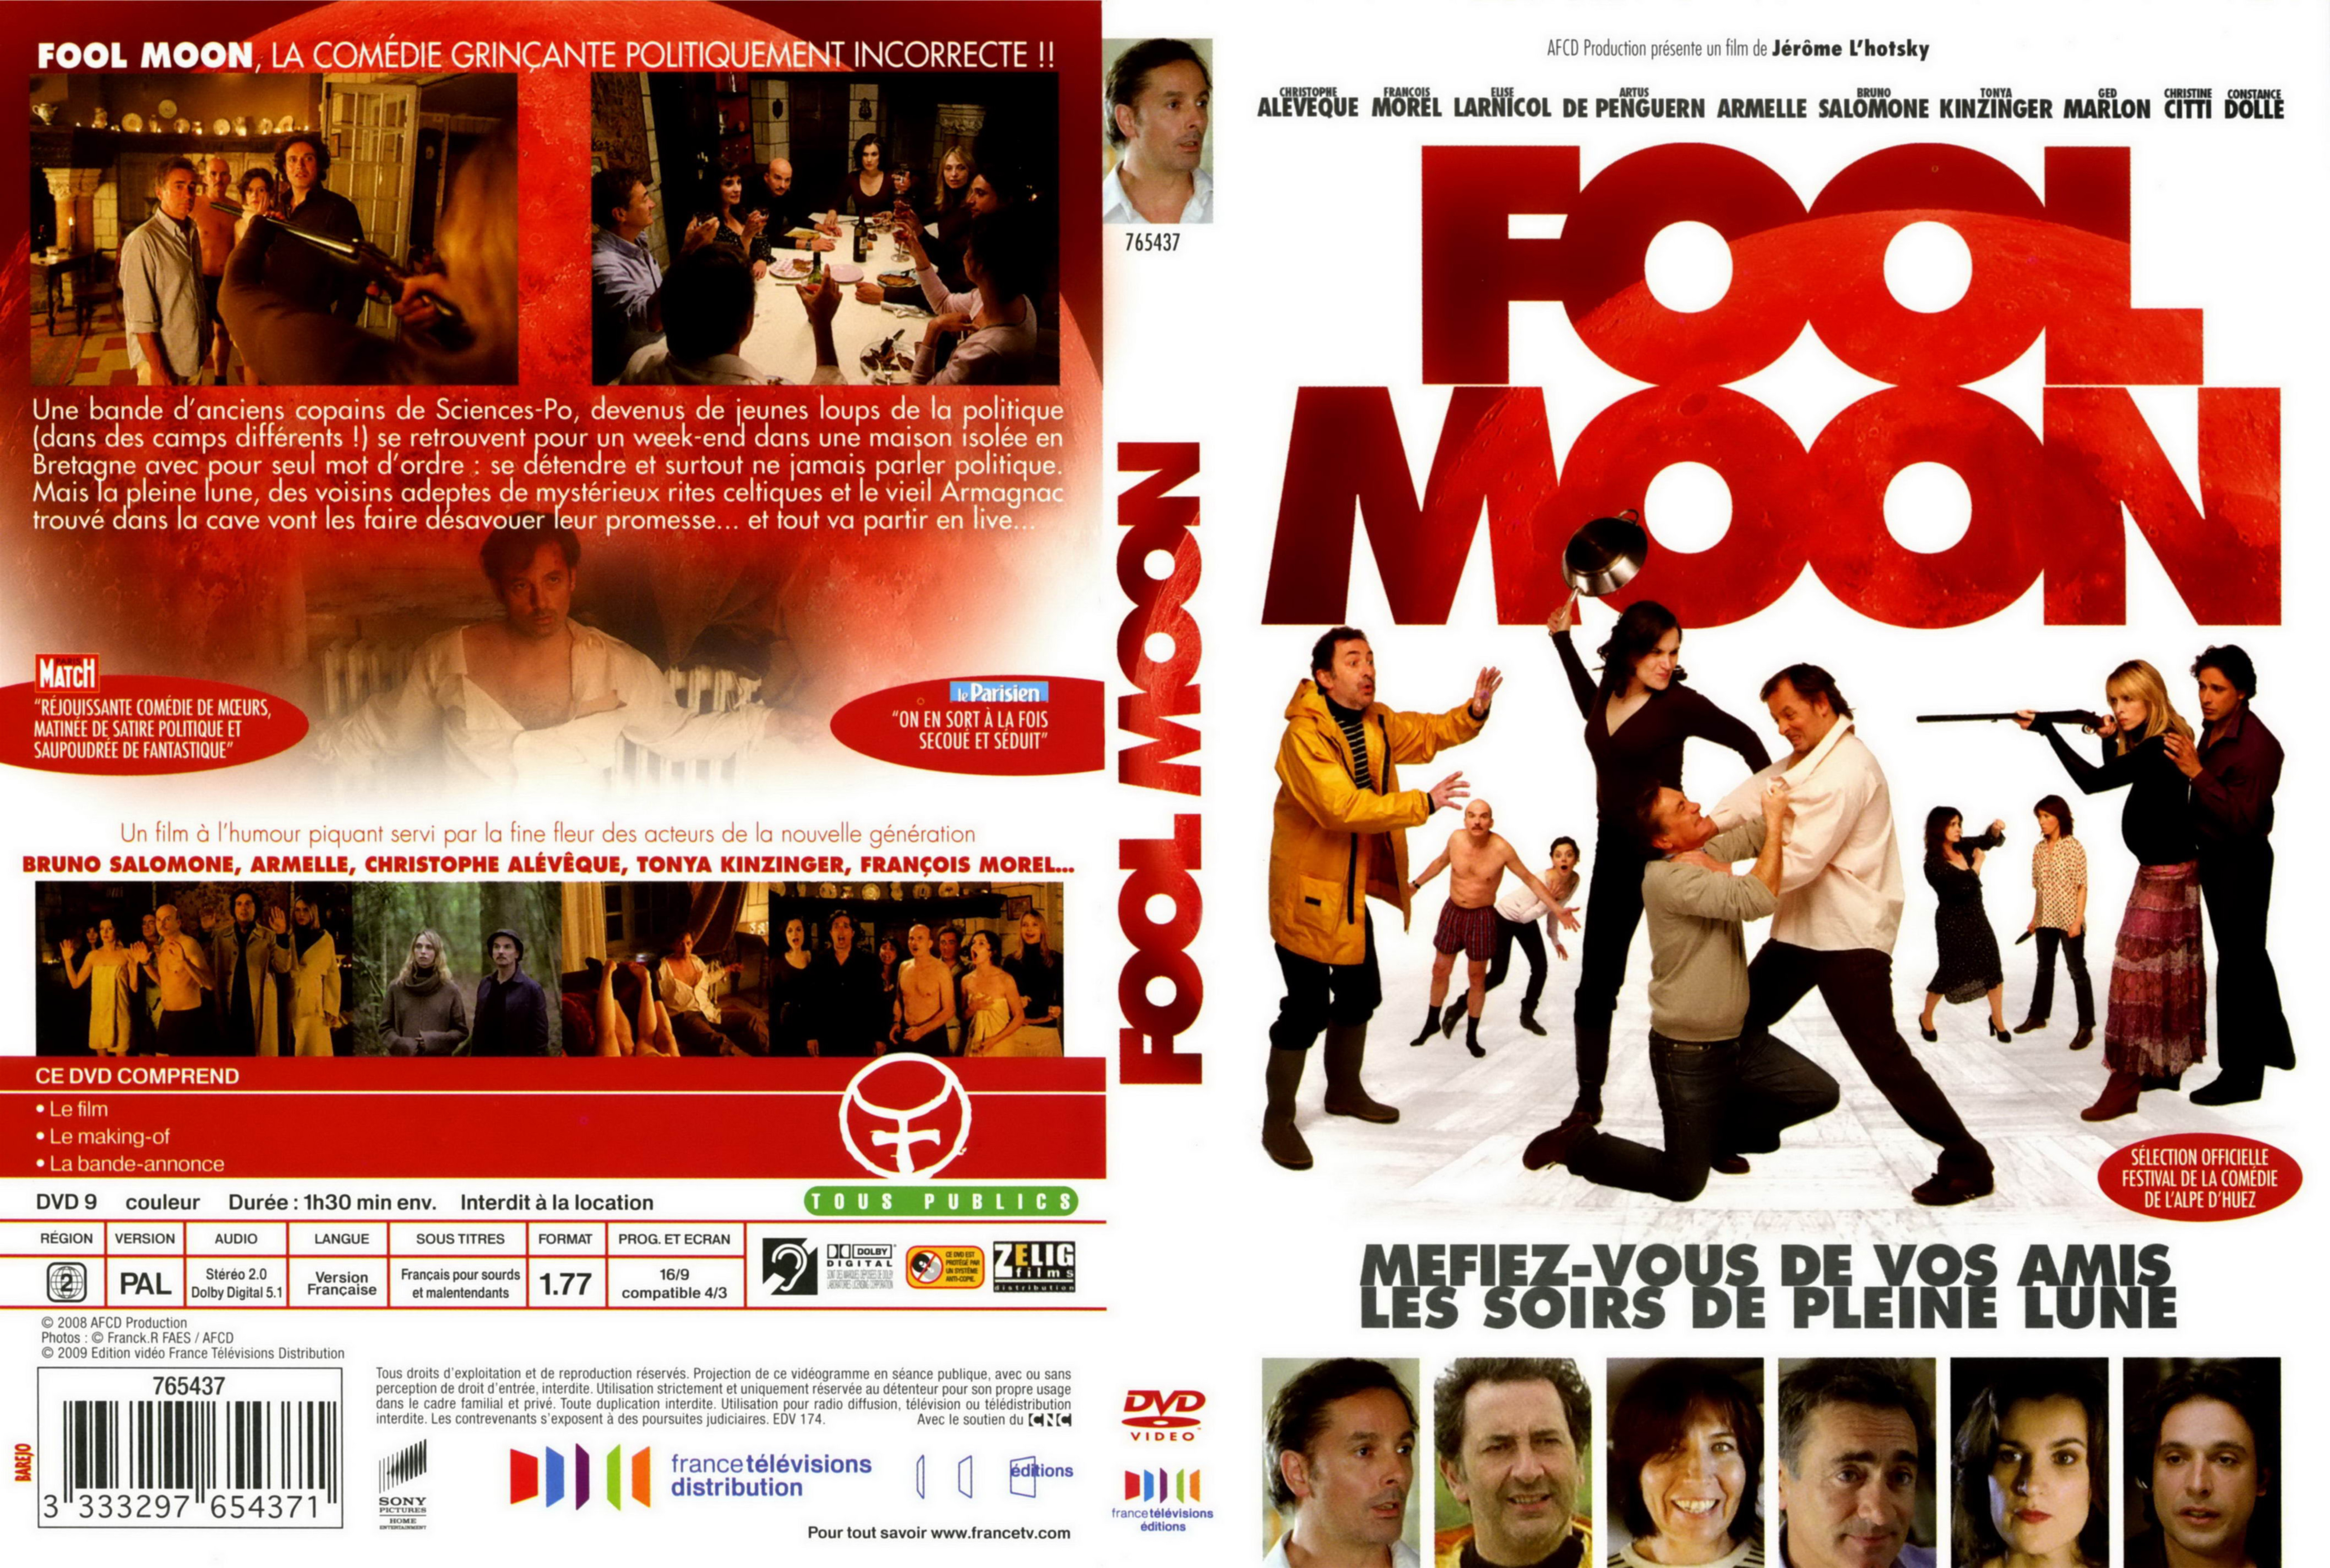 Jaquette DVD Fool moon